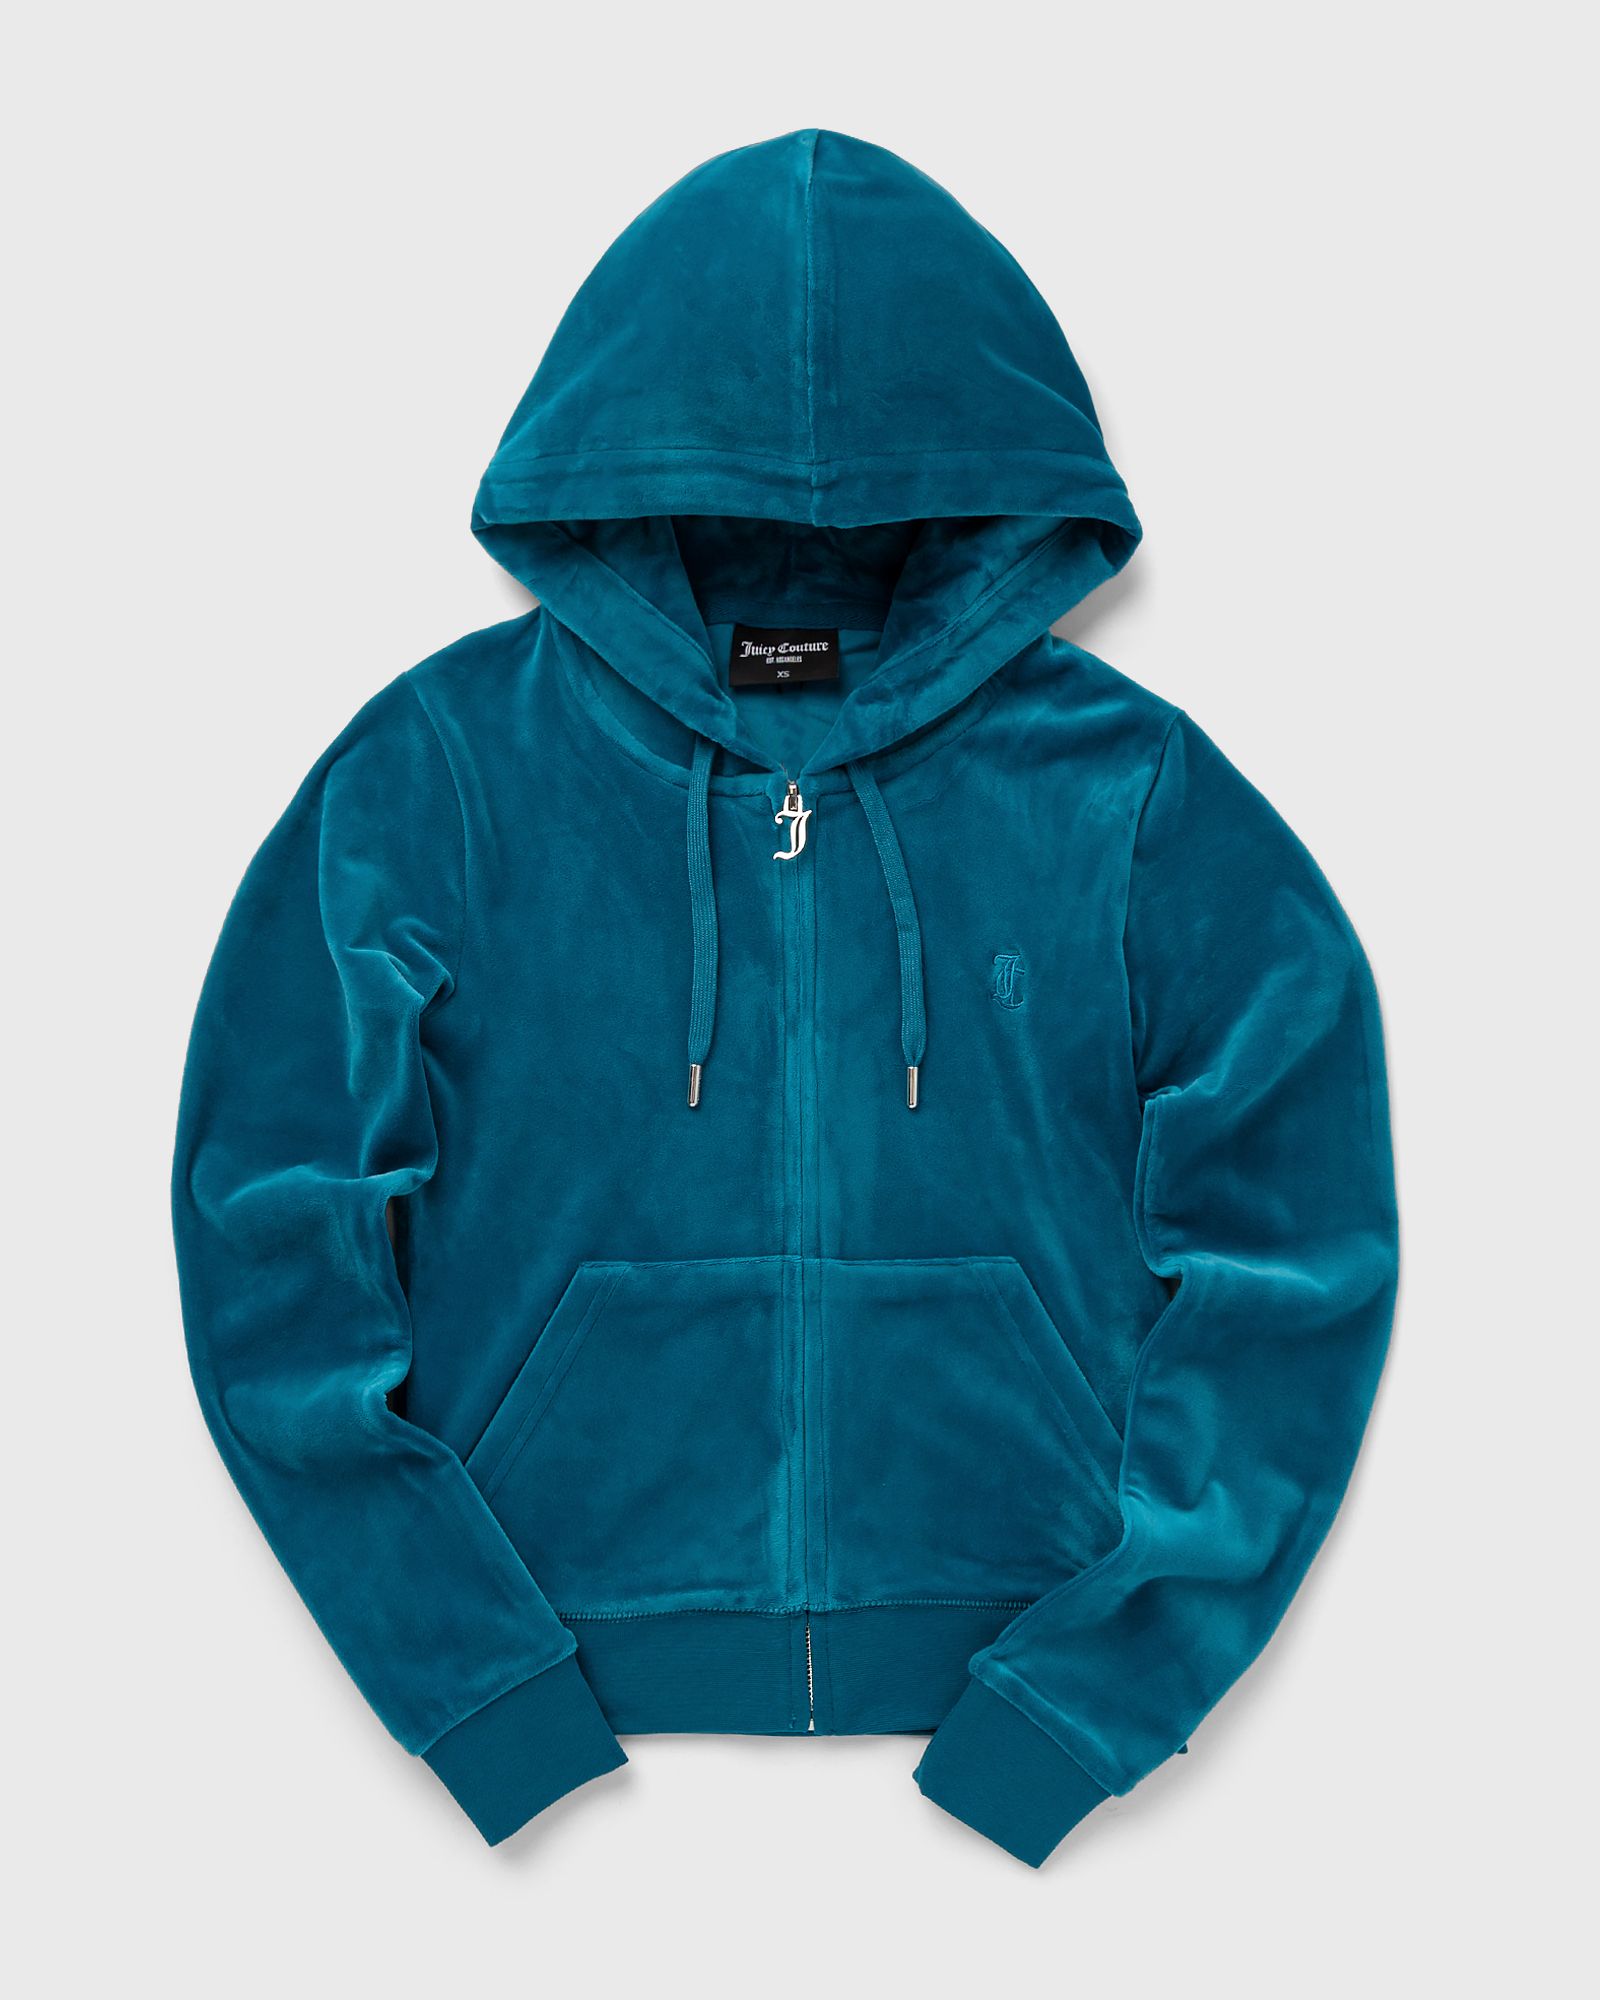 Juicy Couture - classic velour robertson zip hoodie women hoodies|zippers blue in größe:m